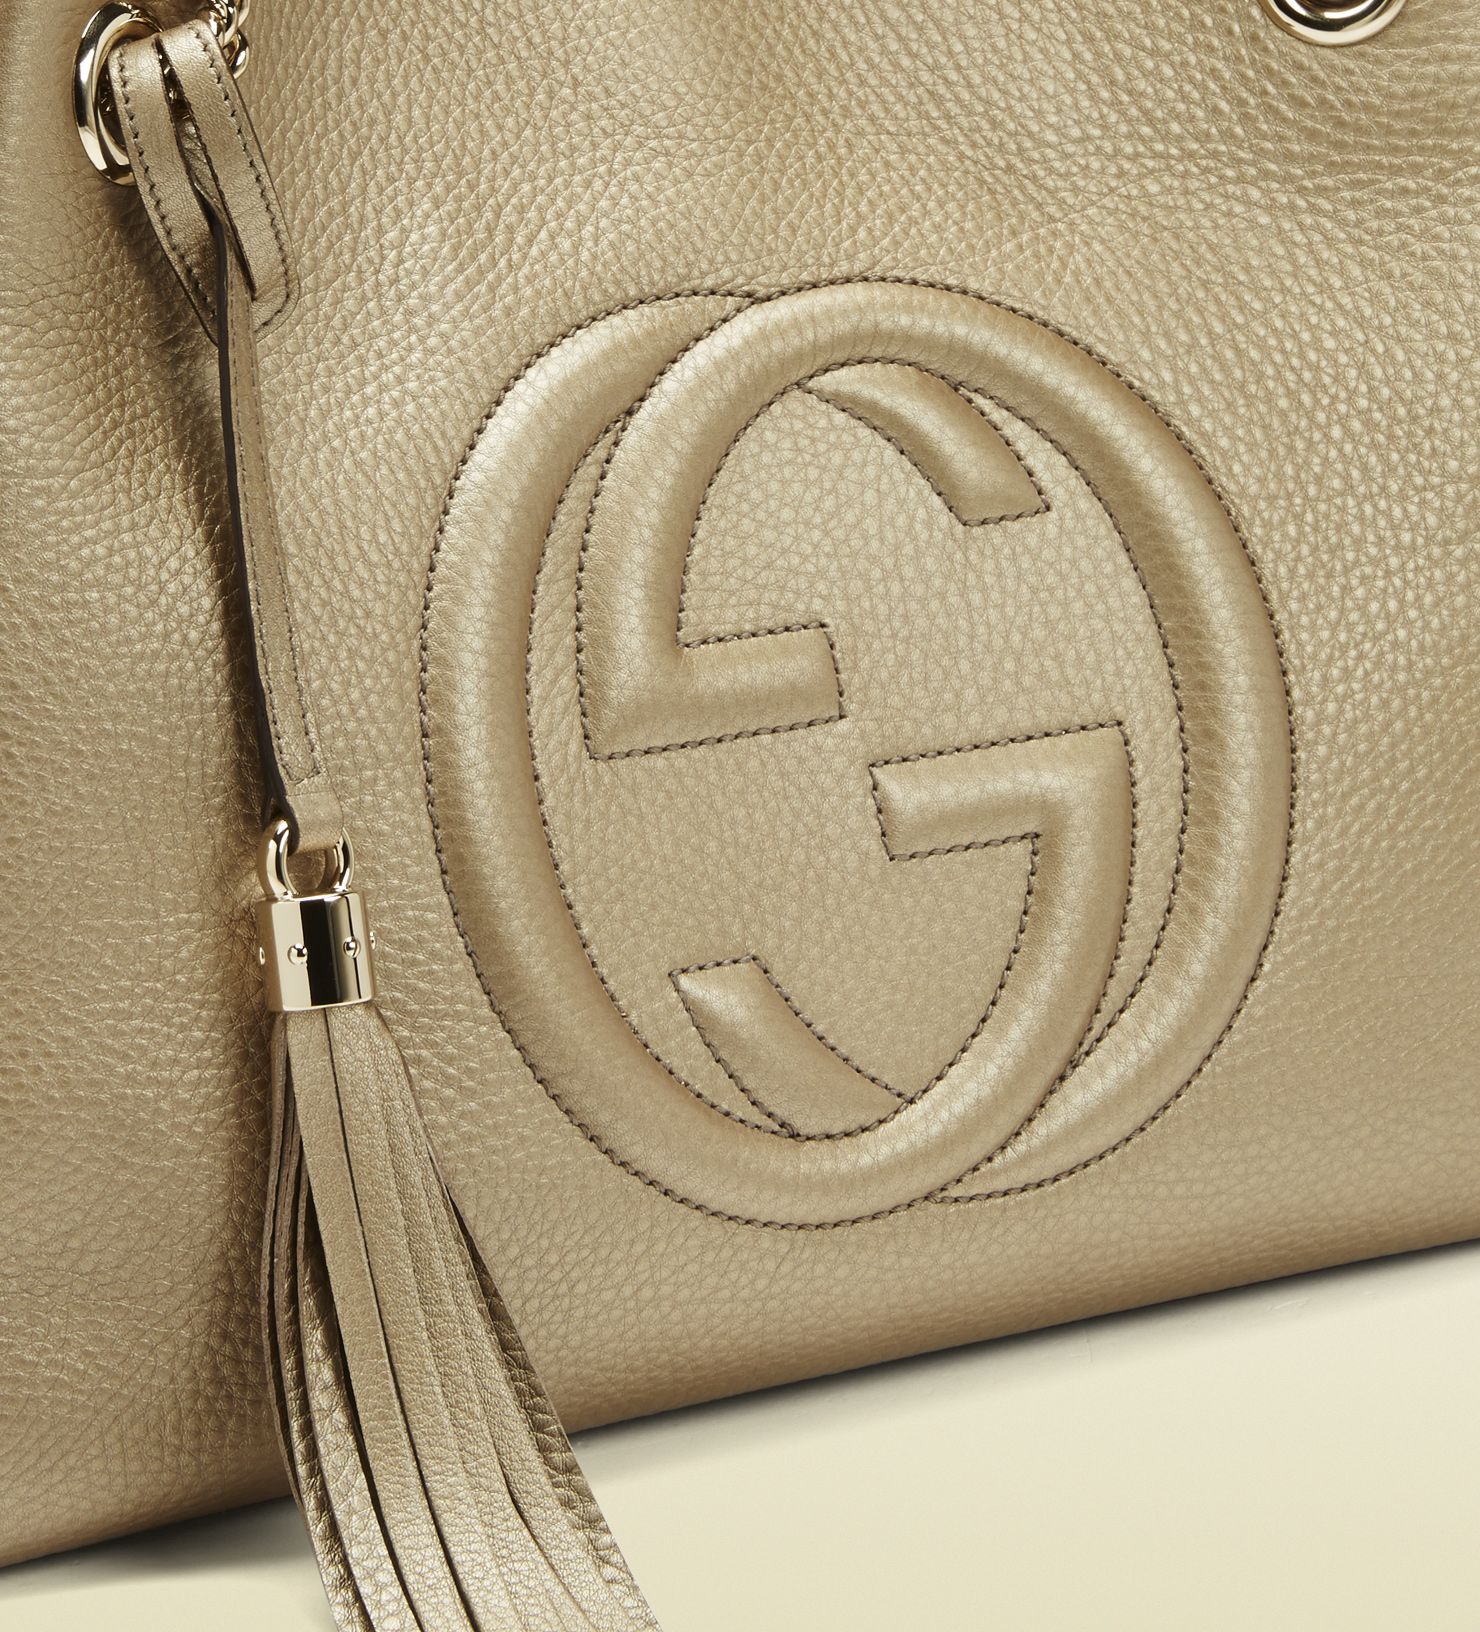 Gucci Soho Metallic Leather Shoulder Bag in Natural | Lyst